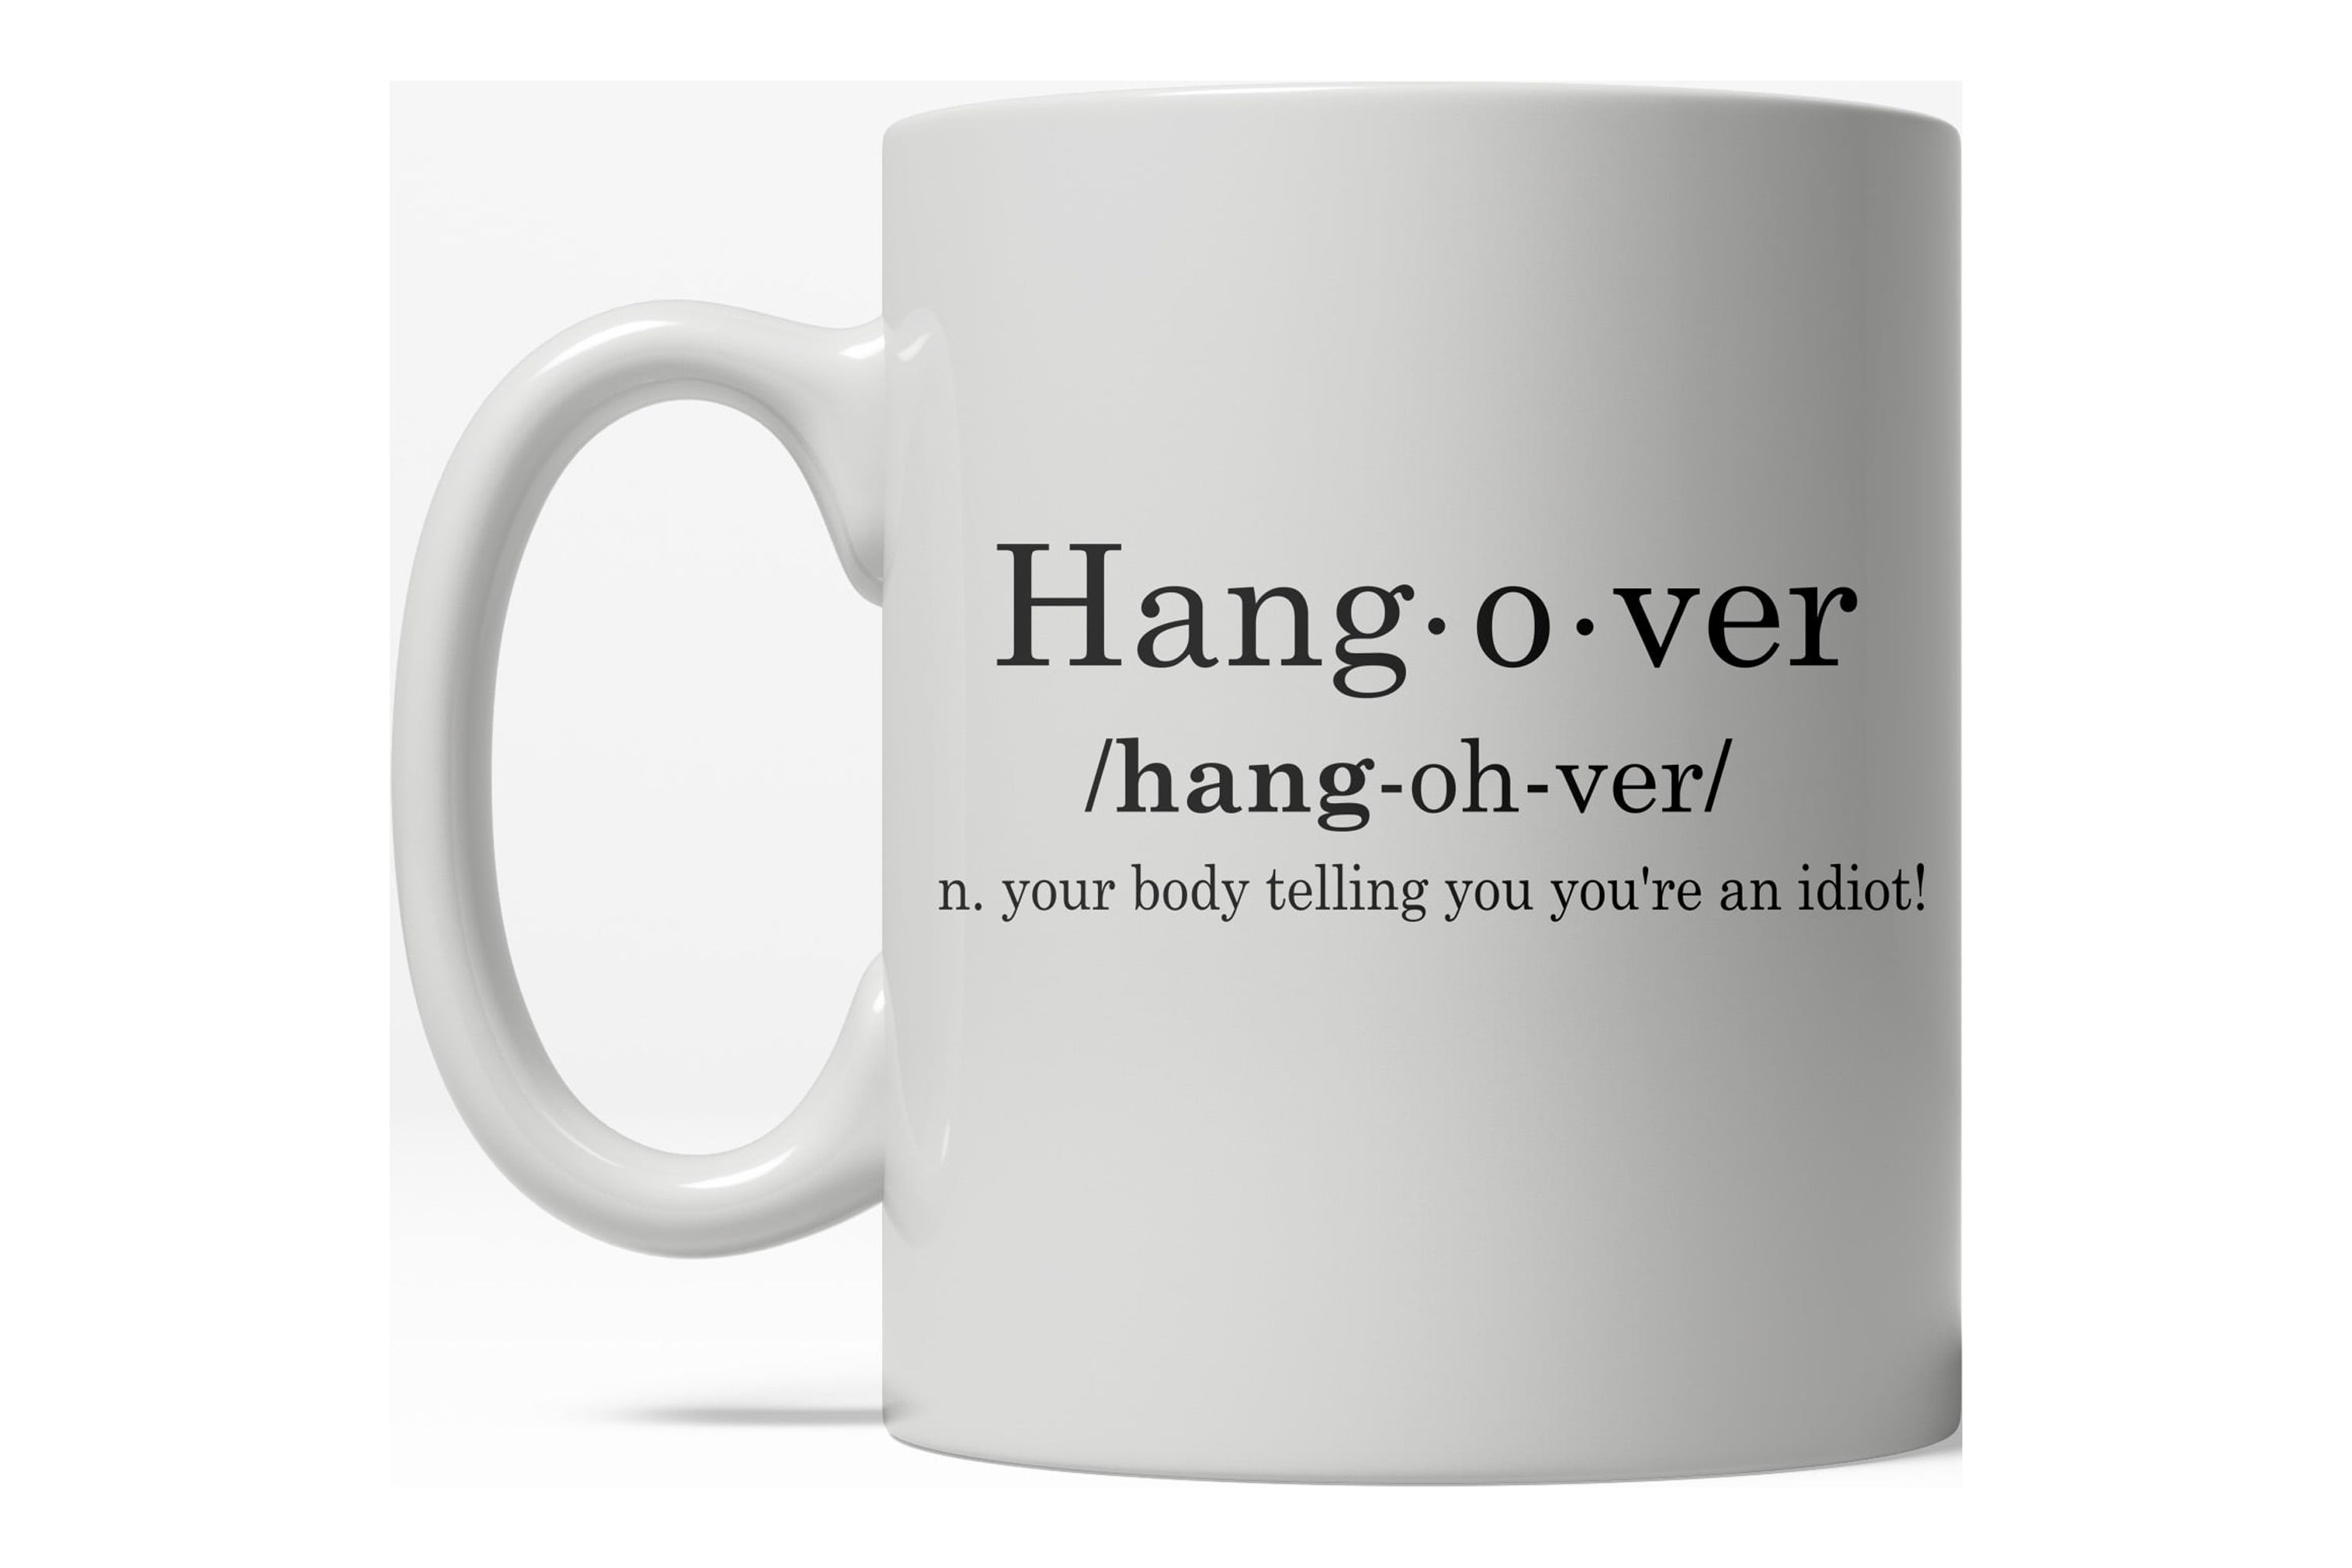 Hangover Definition Funny English Grammar Ceramic Coffee Drinking Mug  - 11oz - image 1 of 1